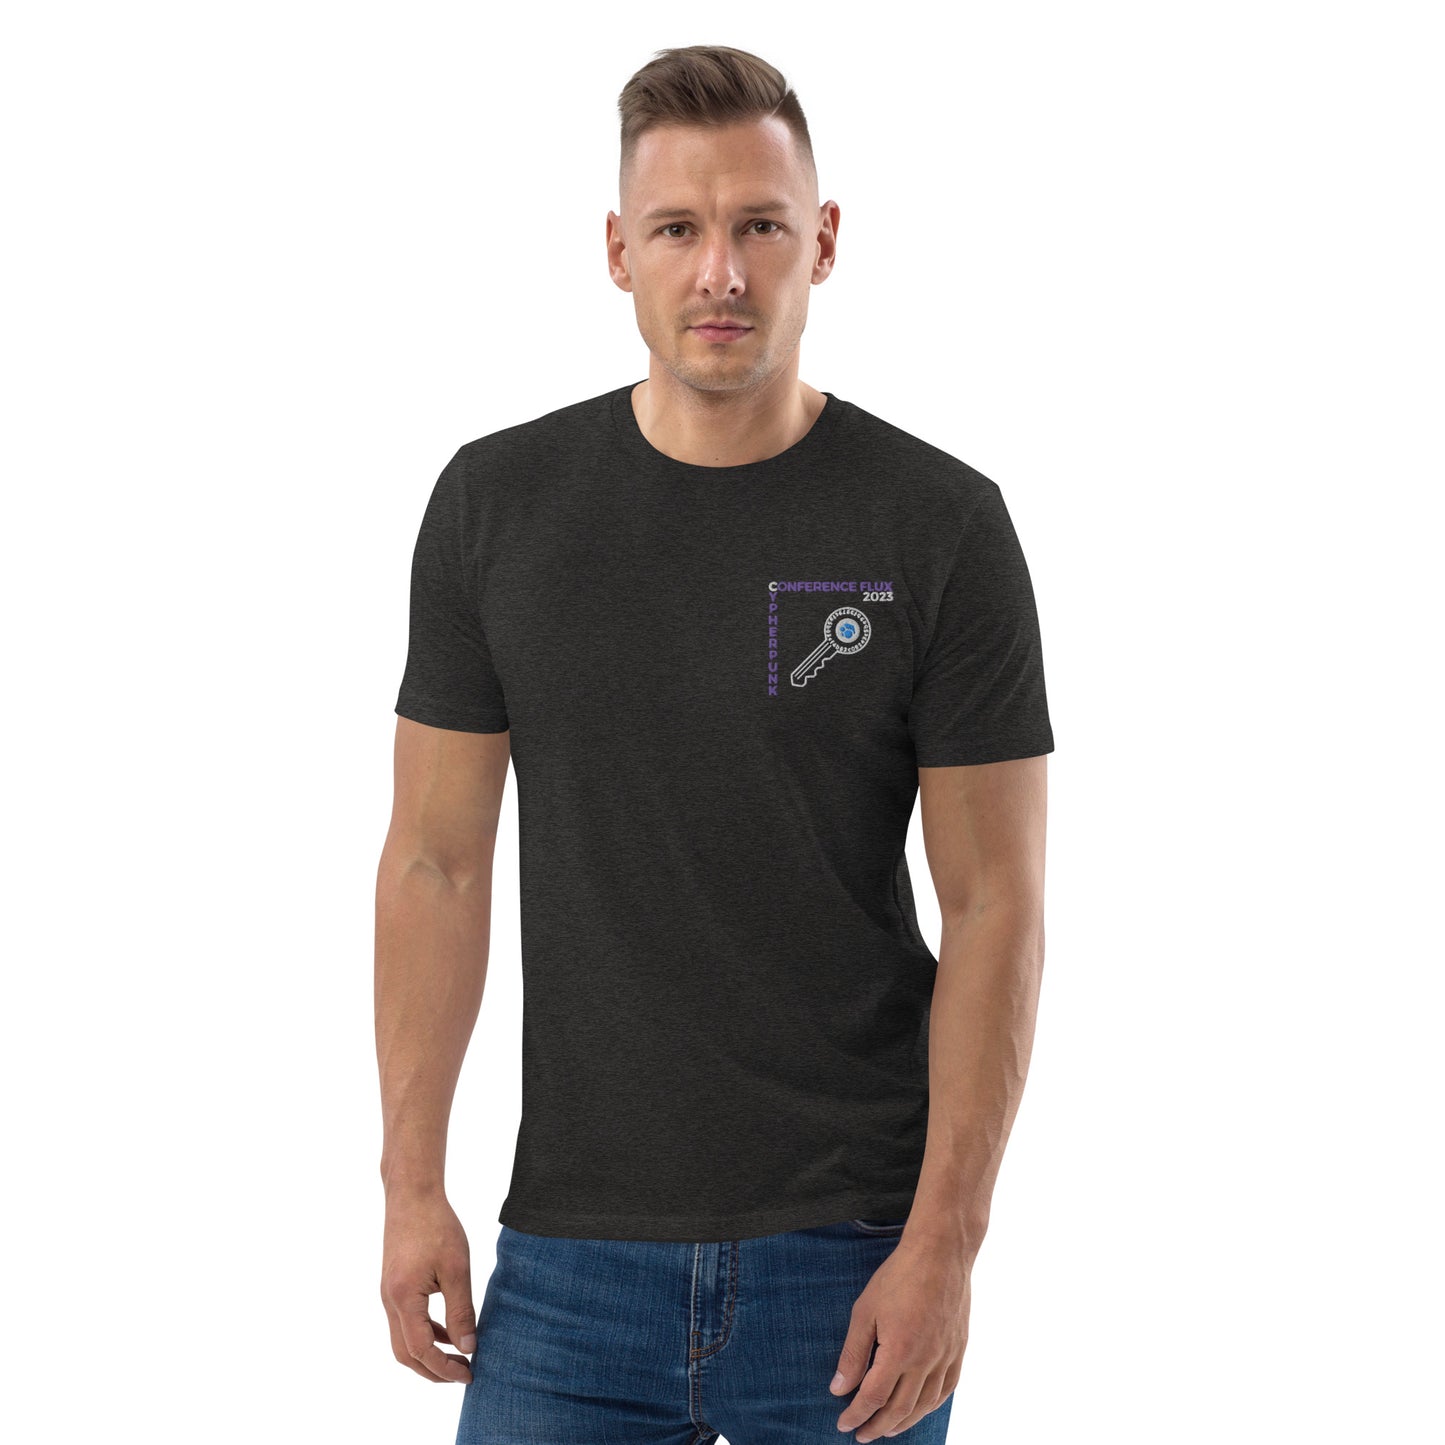 FLUX "Cypherpunk" Unisex Organic Cotton T-Shirt